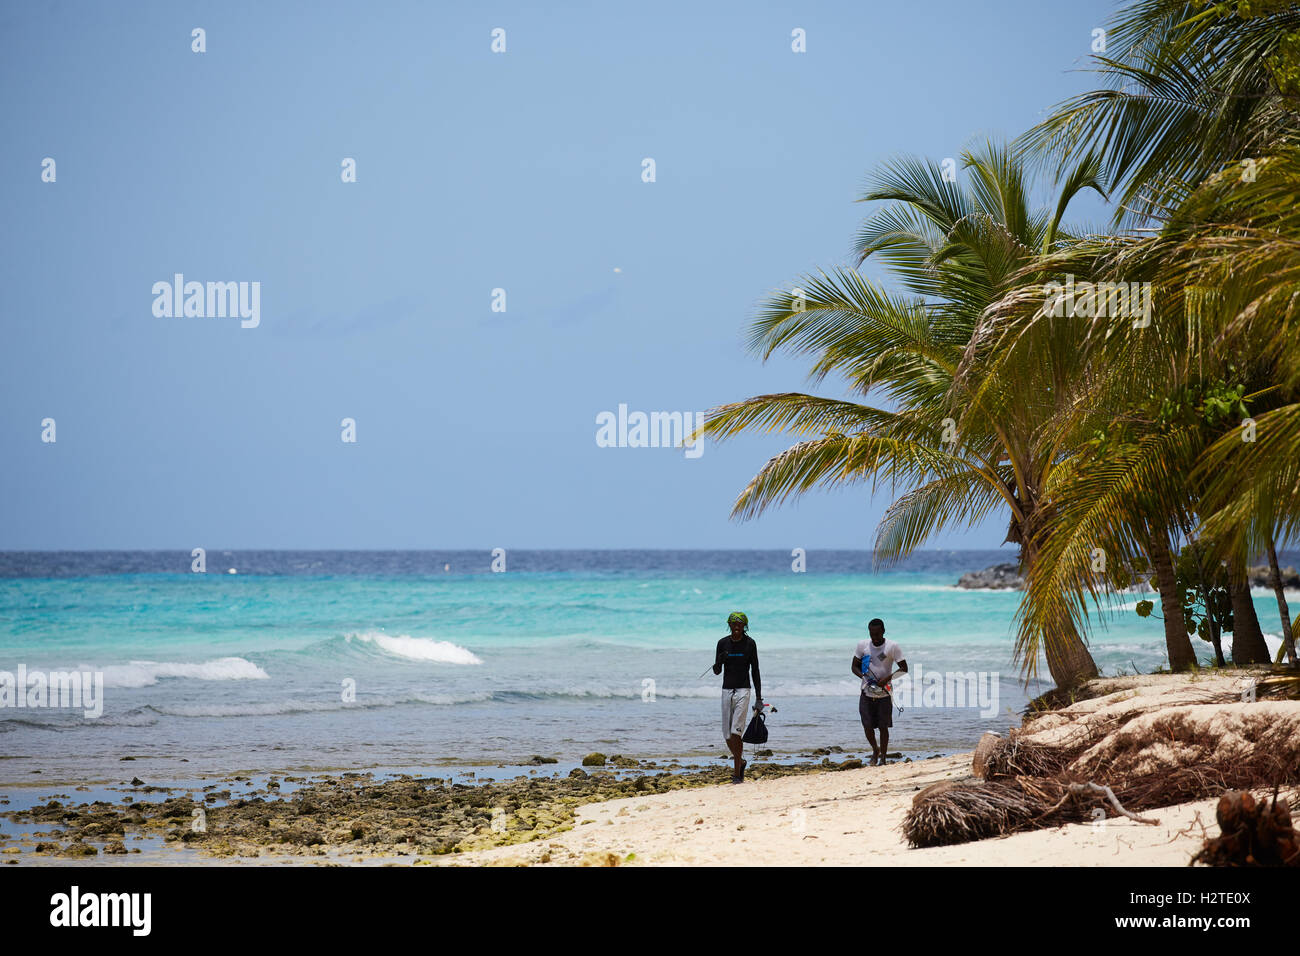 Barbados Hastings Bay fisherman  golden sand beach palm trees coastal walking fisherman carrying rods copyspace Stock Photo